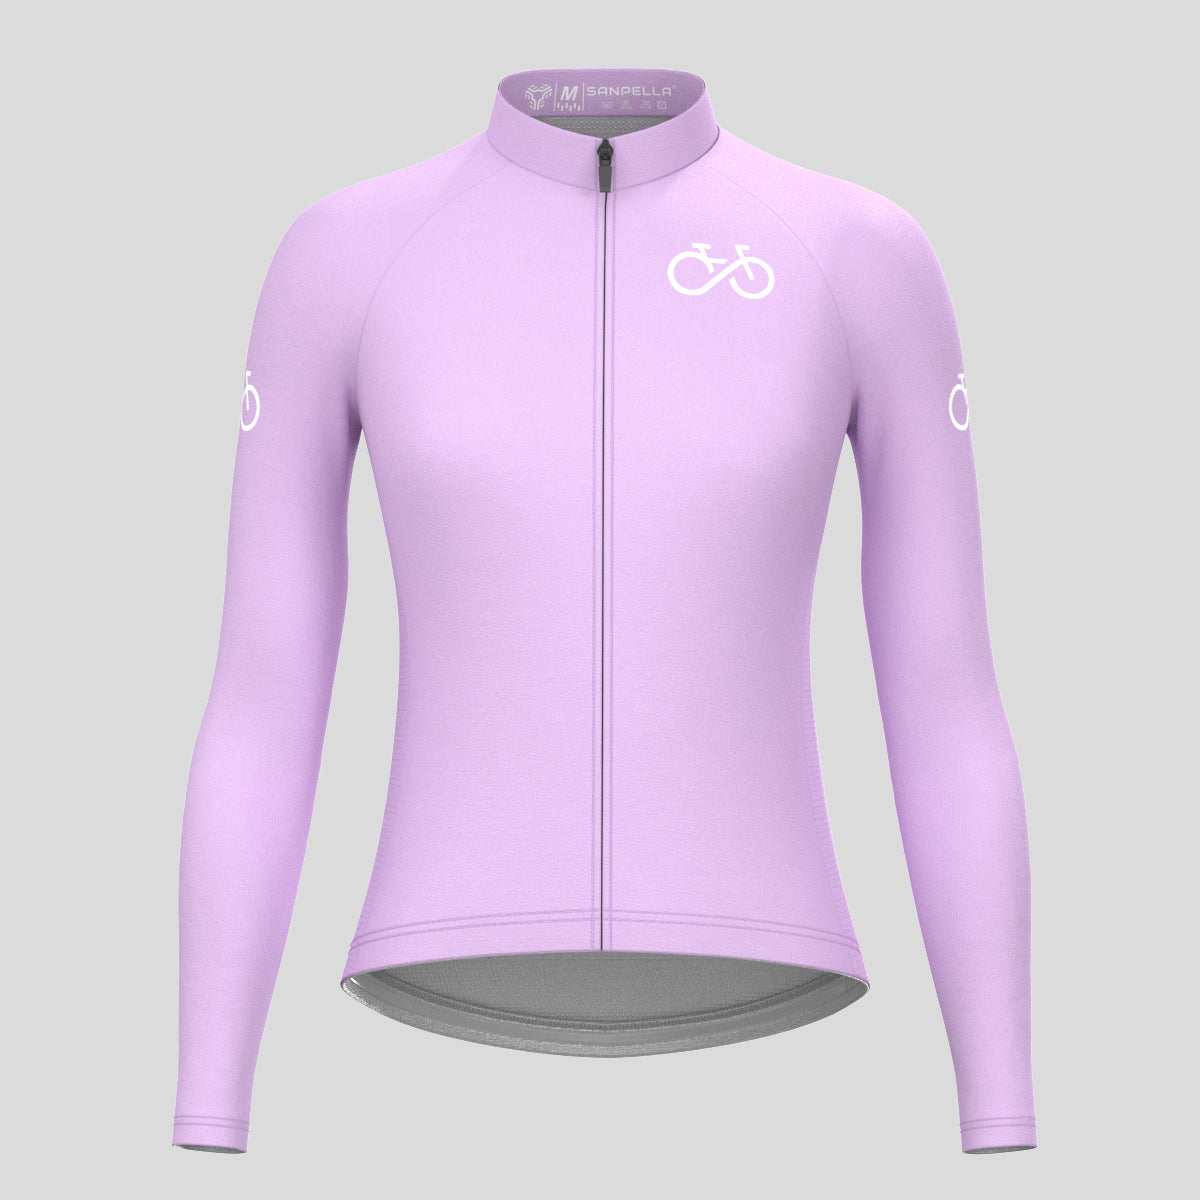 Ride Forever Women's LS Cycling Jersey - Haze